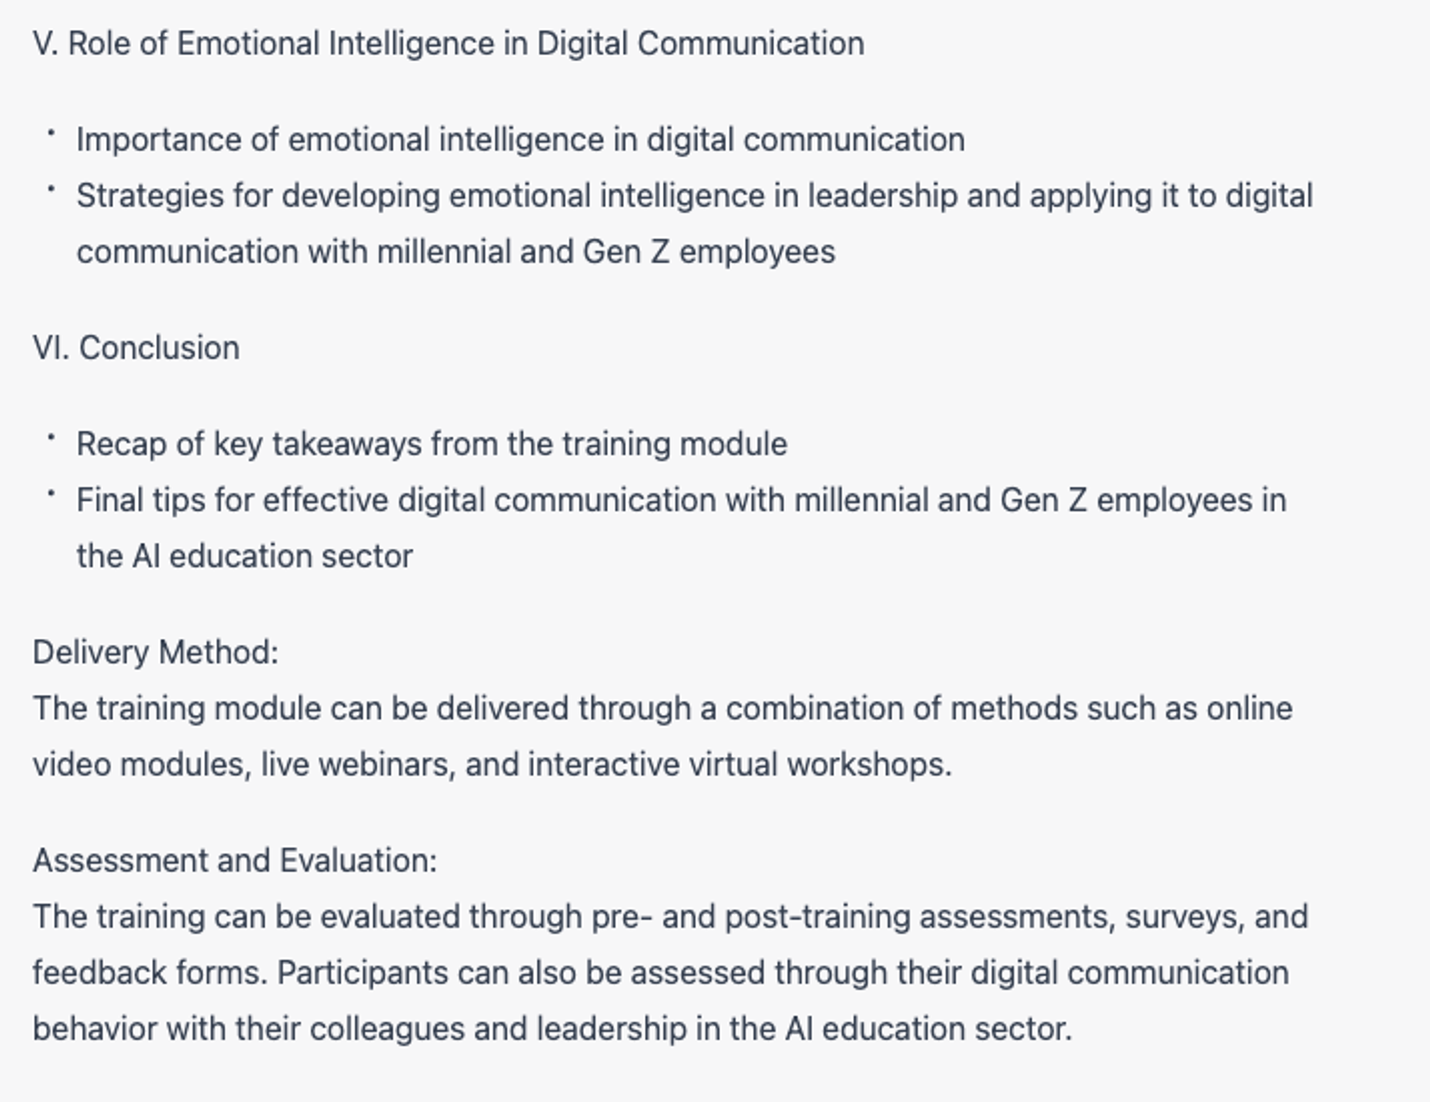  7 Strategic ChatGPT Prompts: Developing digital leadership training